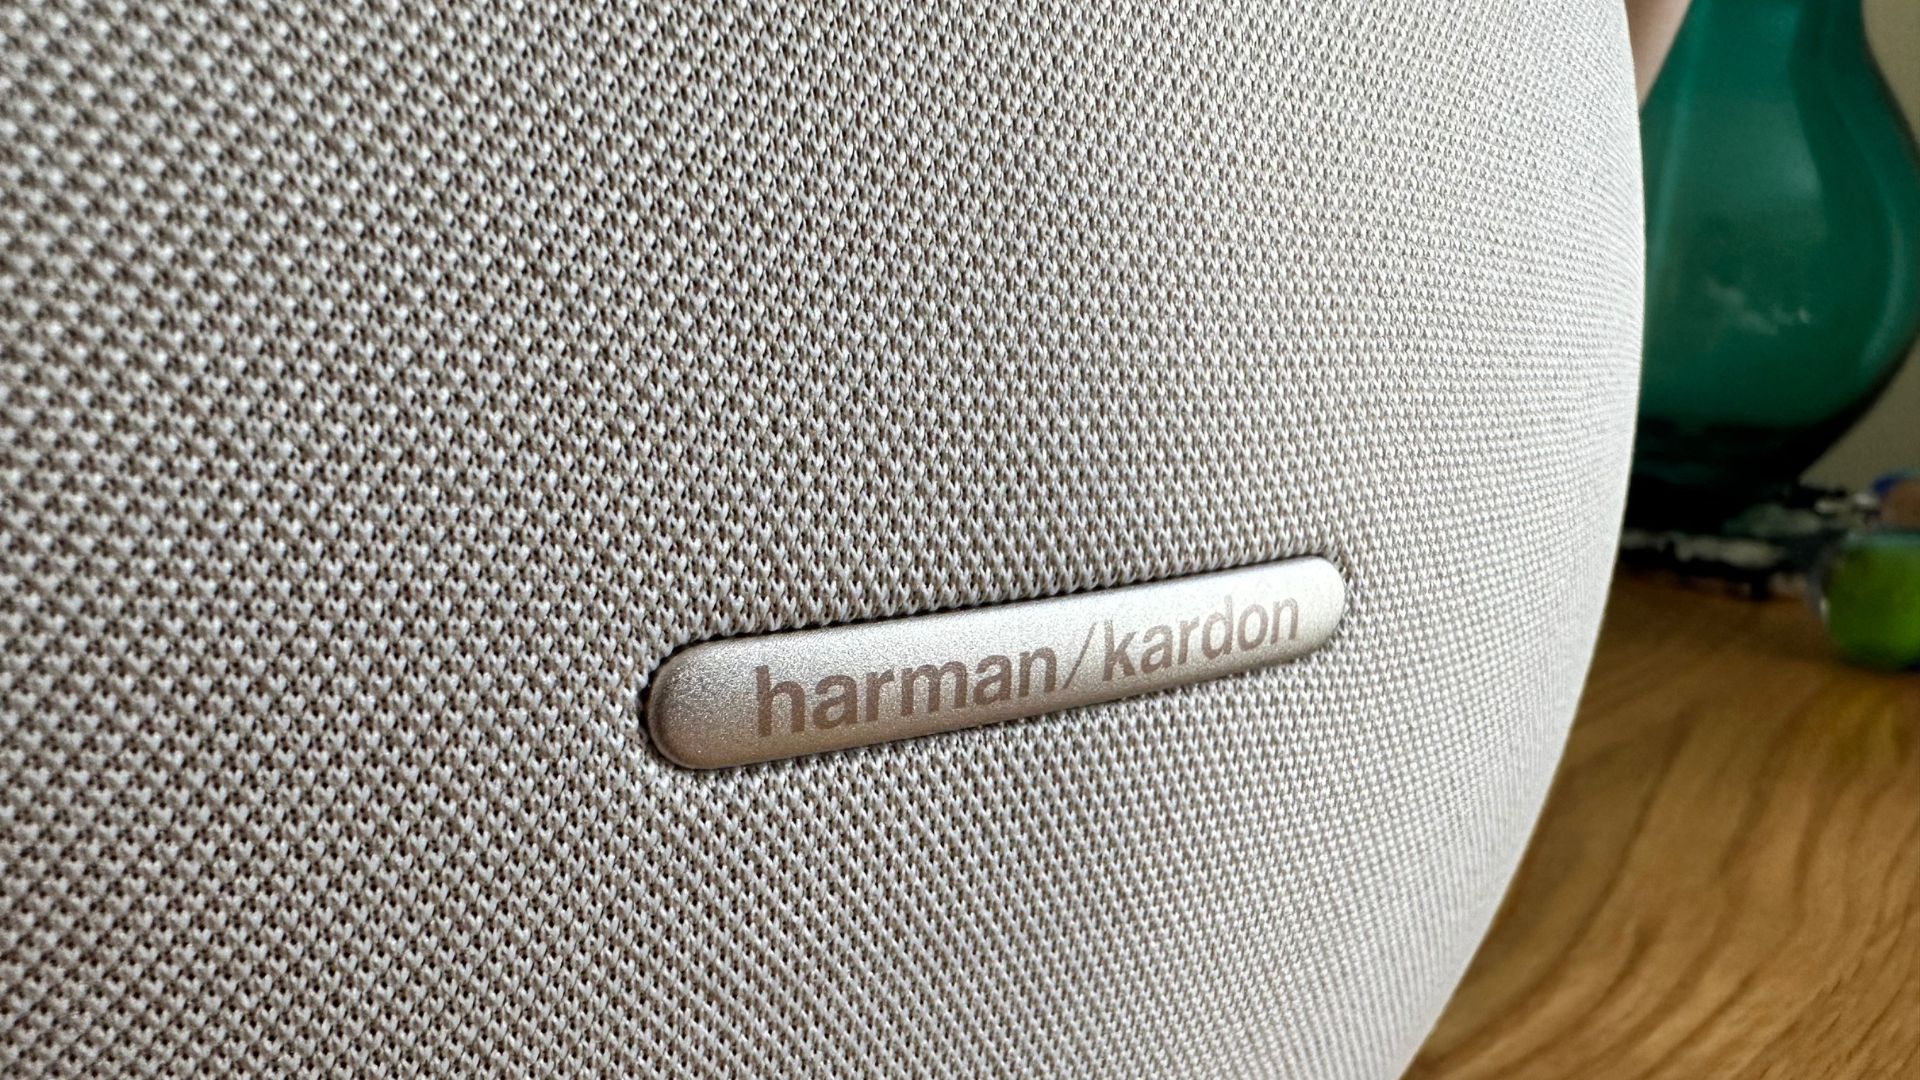 Harman Kardon Studio Onyx 8 on a wooden sidetable Harman Kardon Logo